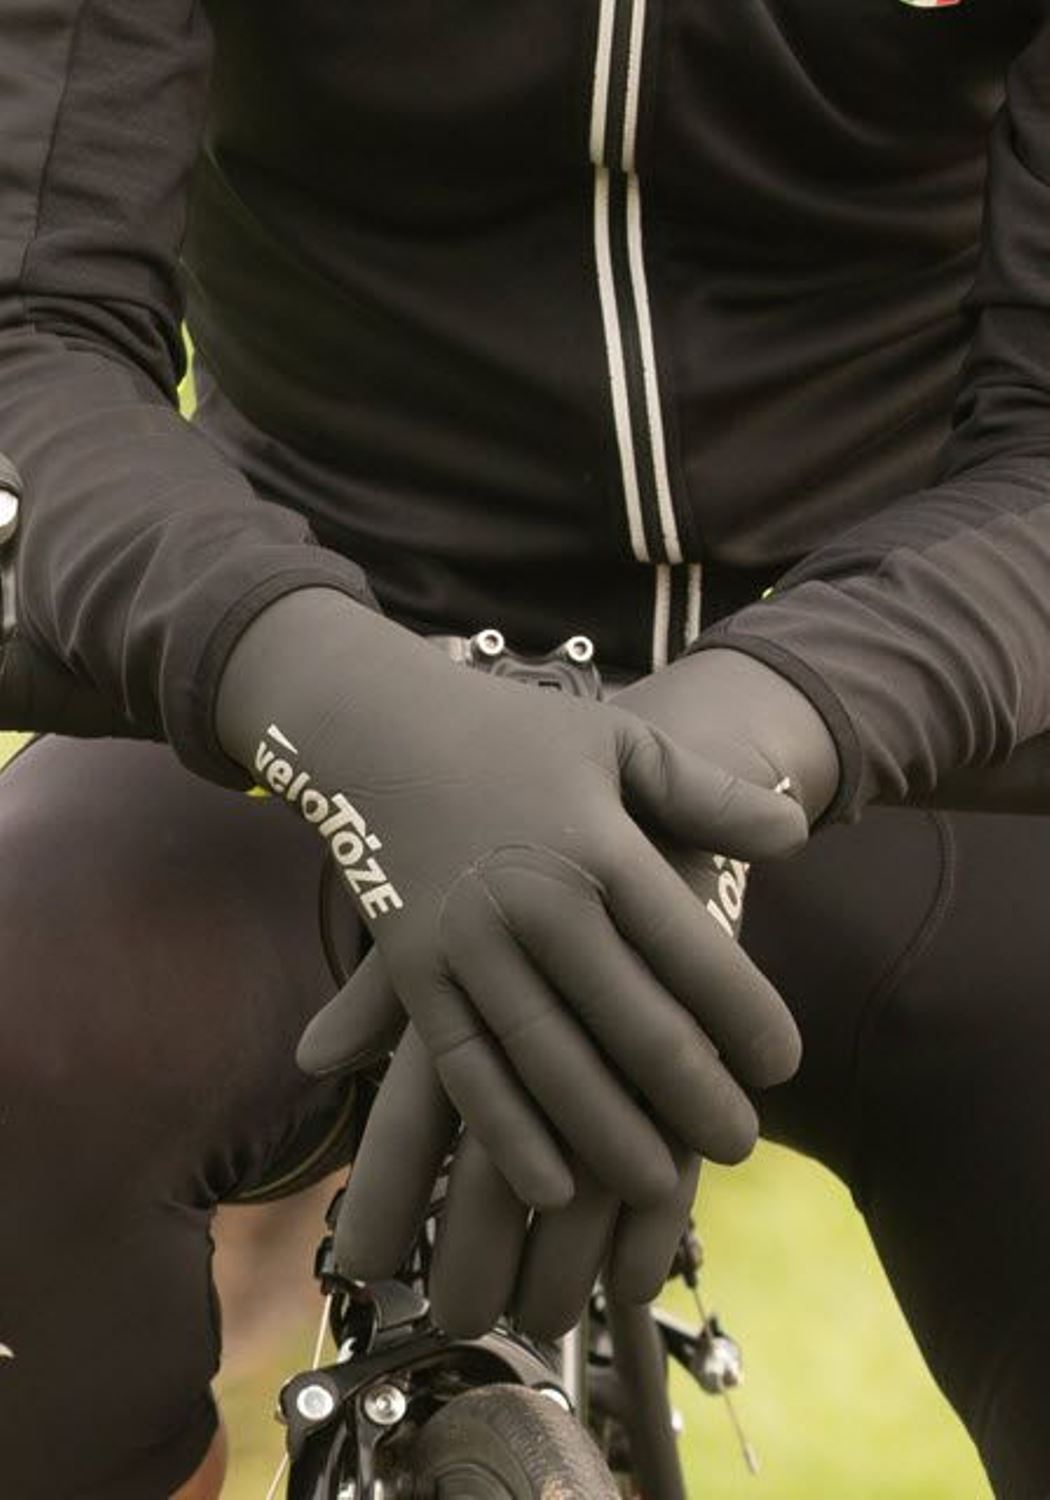 Neoprene Large Long Cuff Gloves, Black